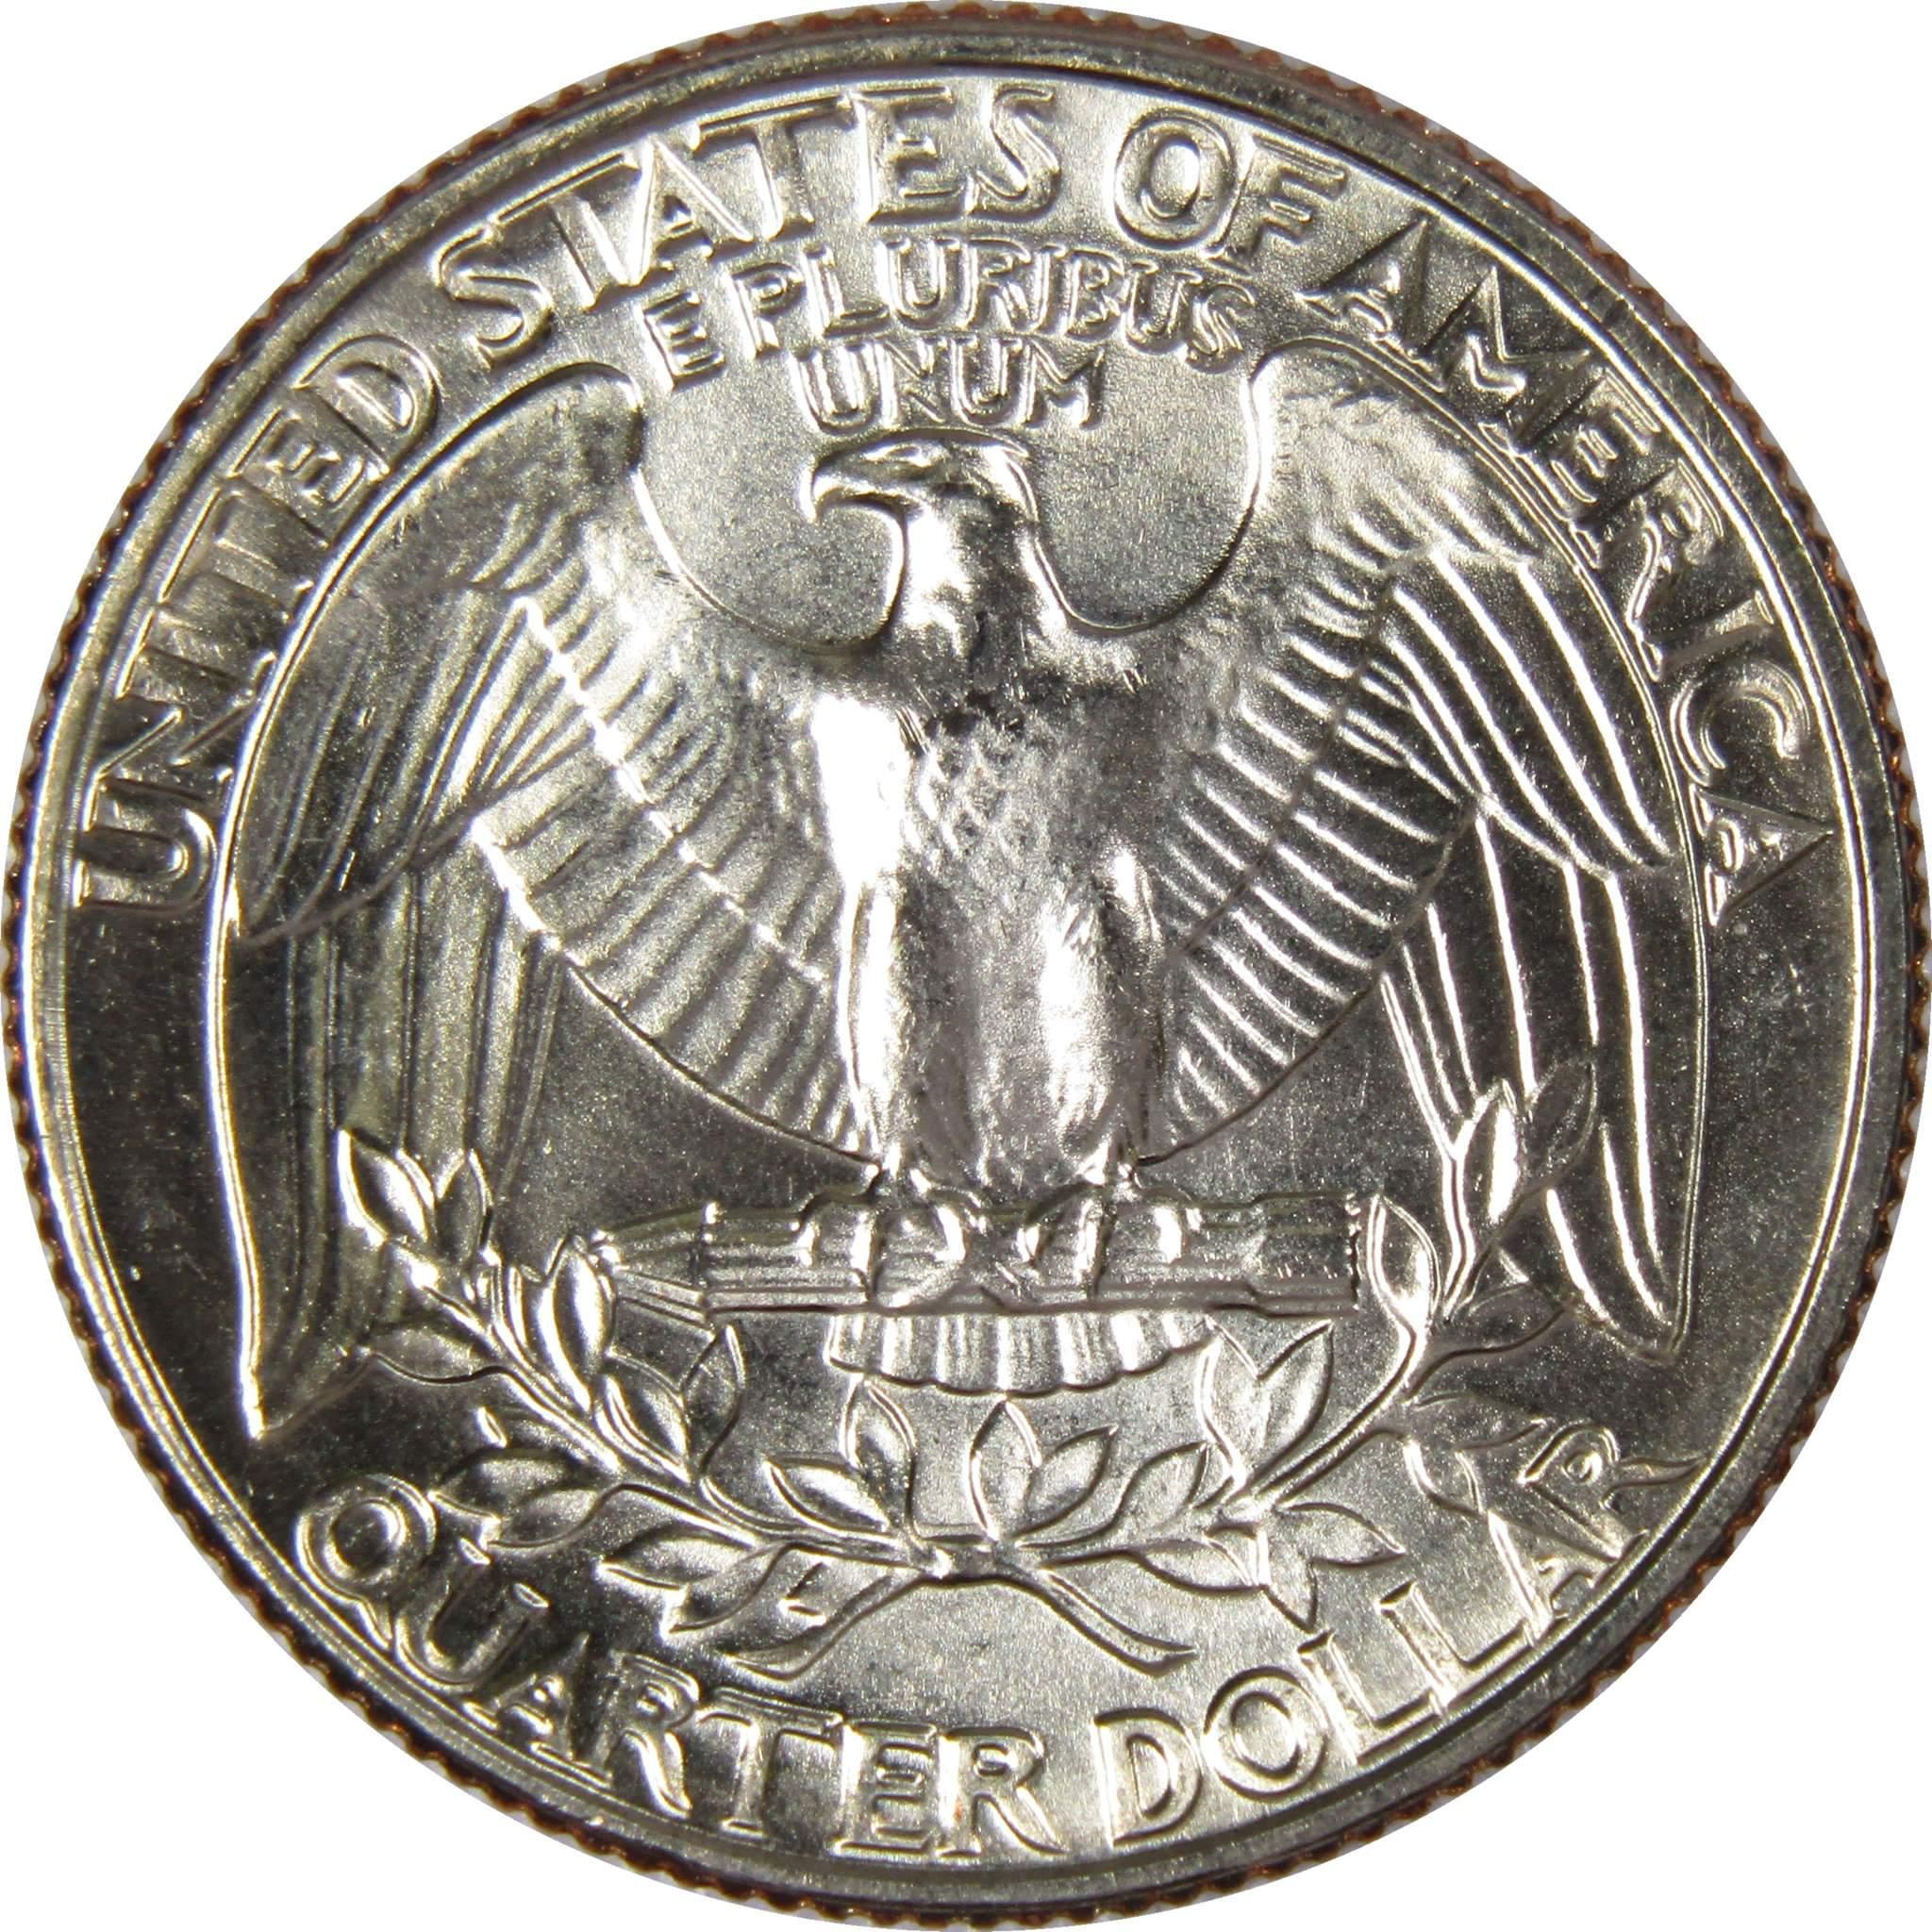 1981 D Washington Quarter BU Uncirculated Mint State 25c US Coin 